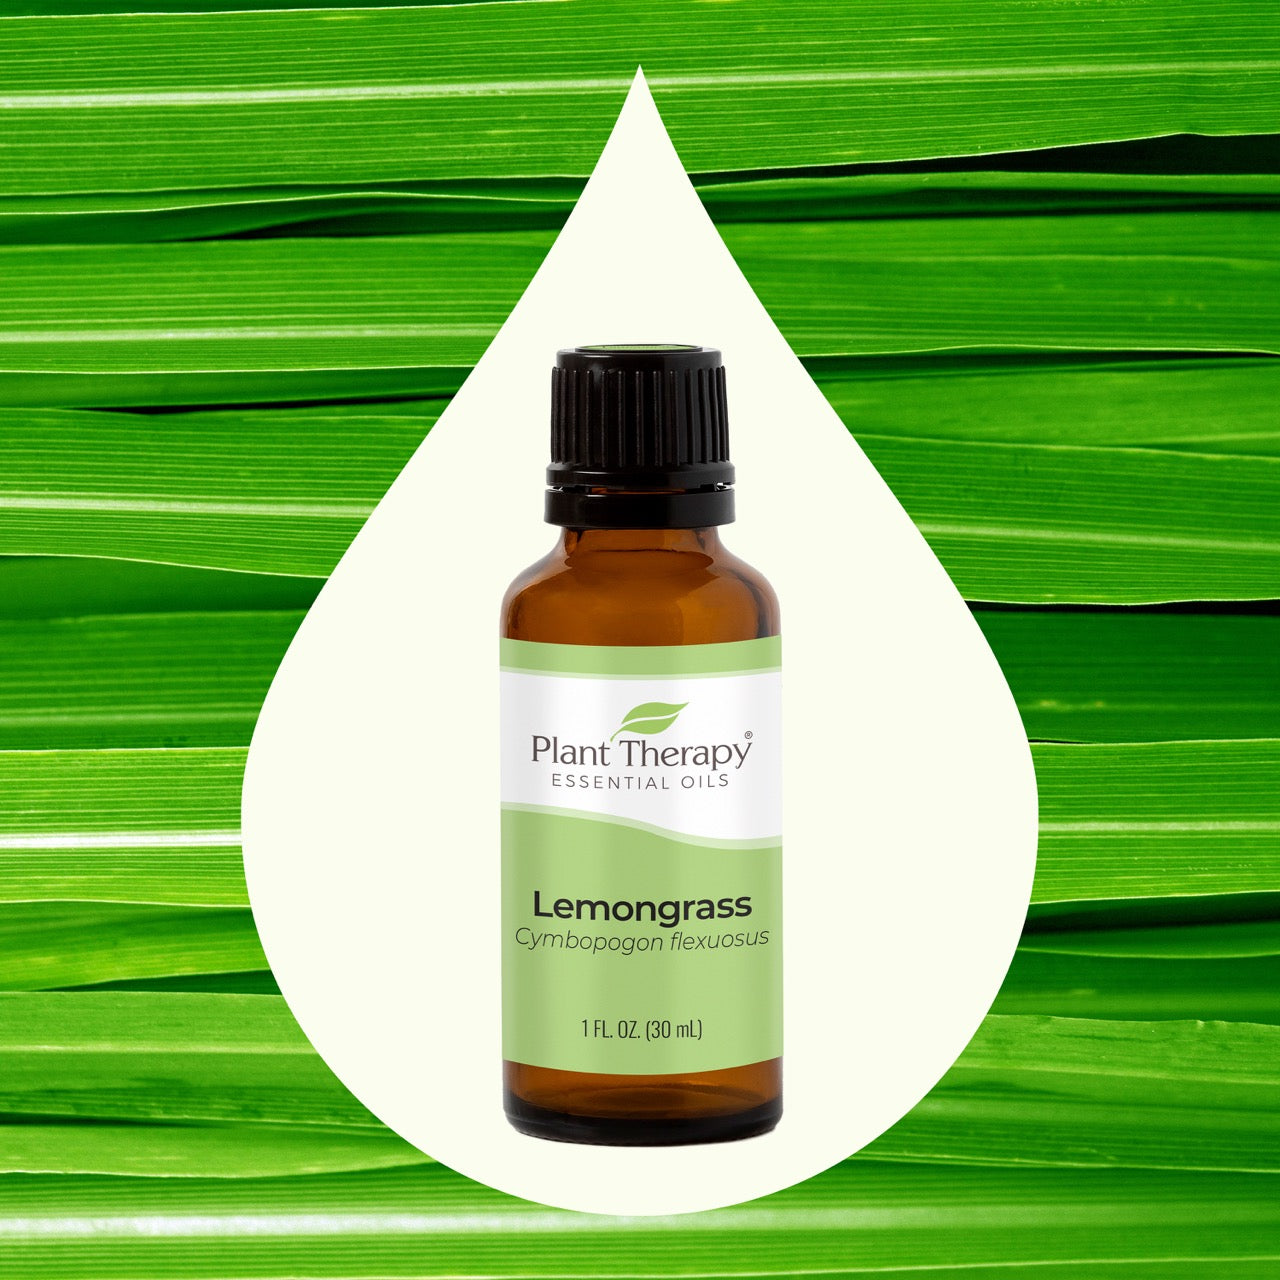 Lemongrass Essential Oil Key ingredient image